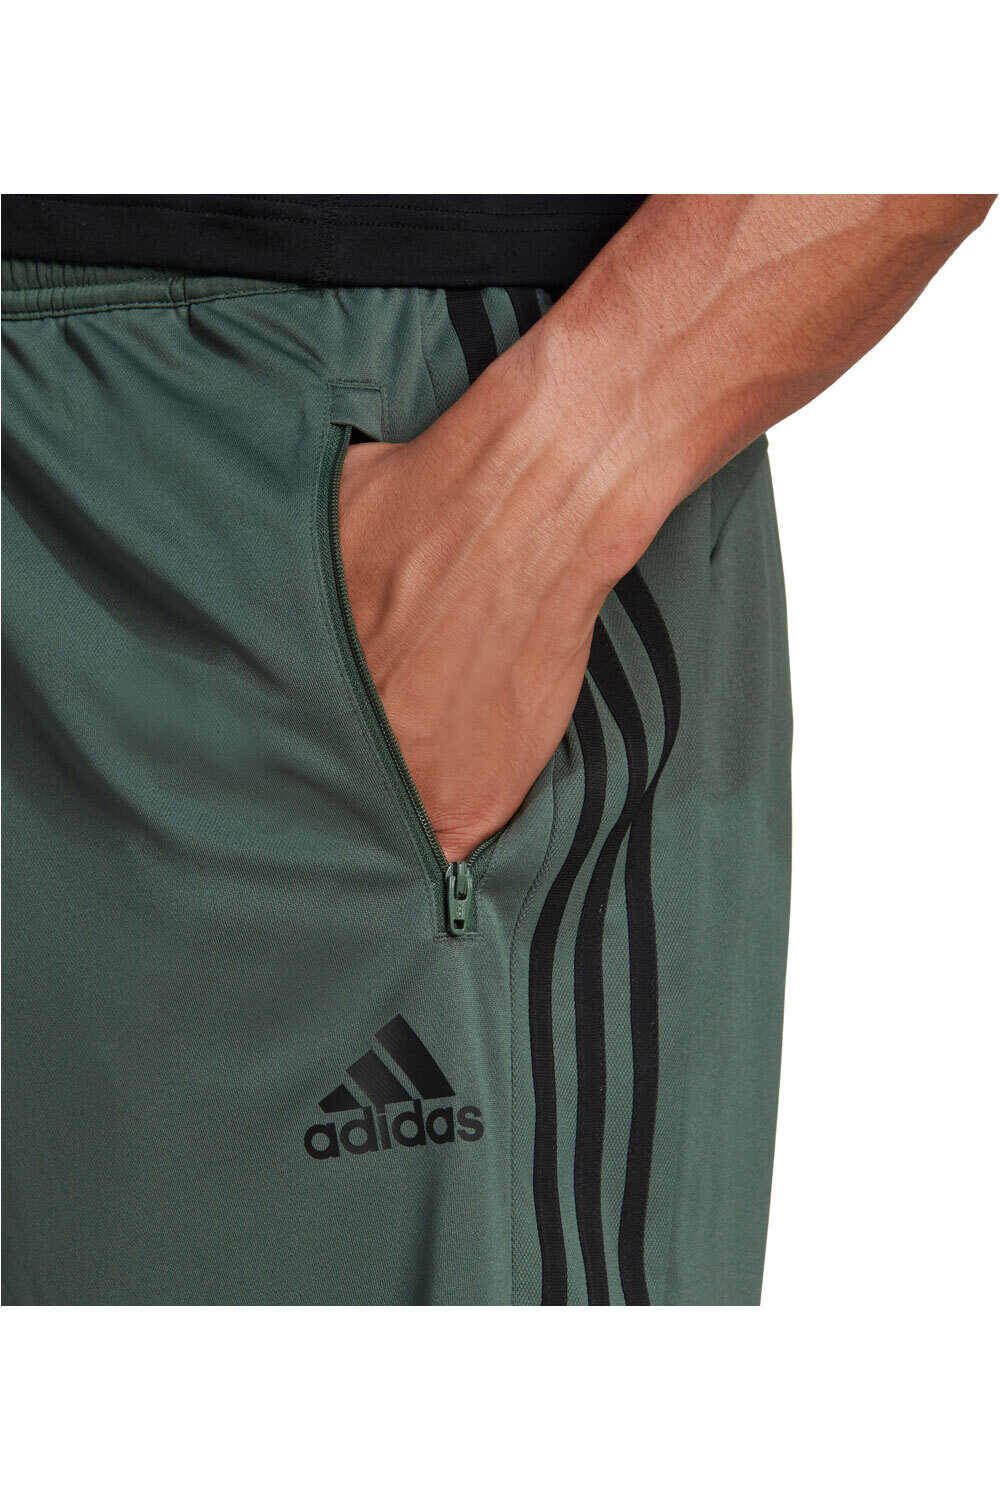 adidas pantalón corto fitness hombre Primeblue Designed To Move Sport 3 bandas vista detalle